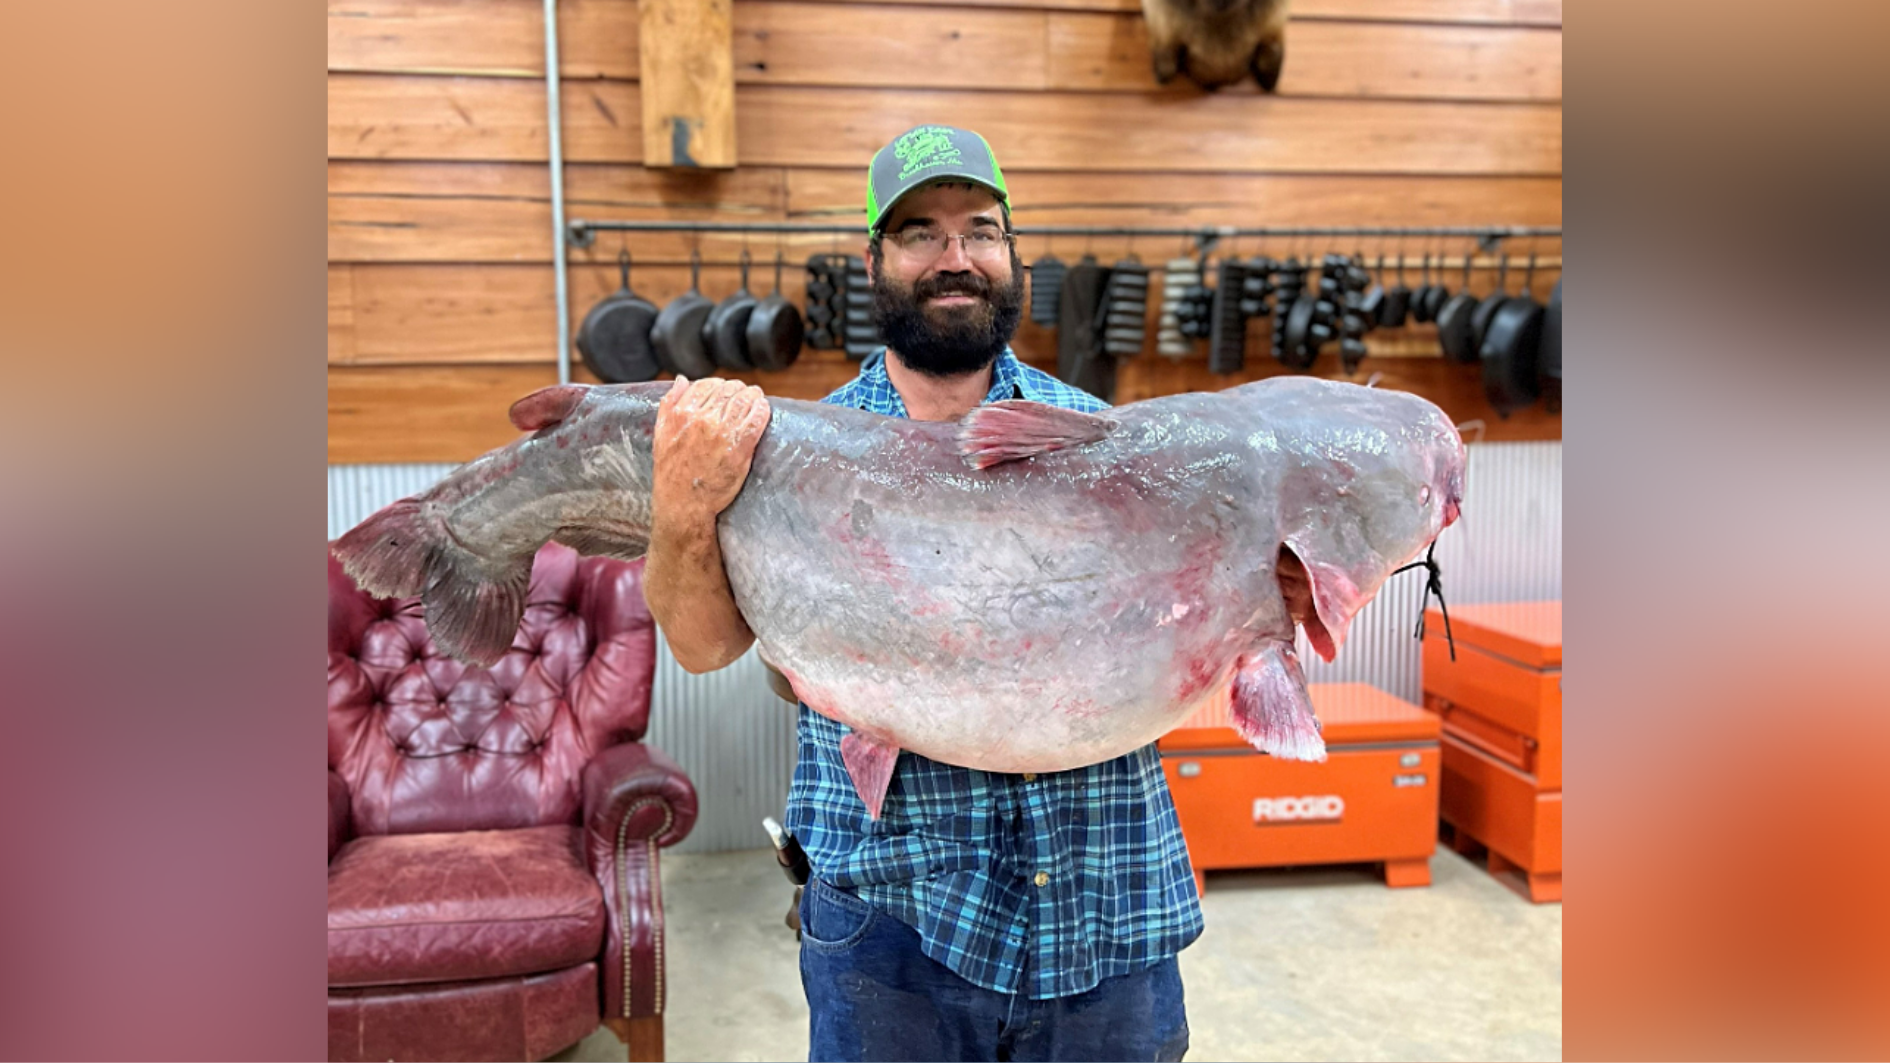 Massive catch! Man sets state record with 104-pound catfish